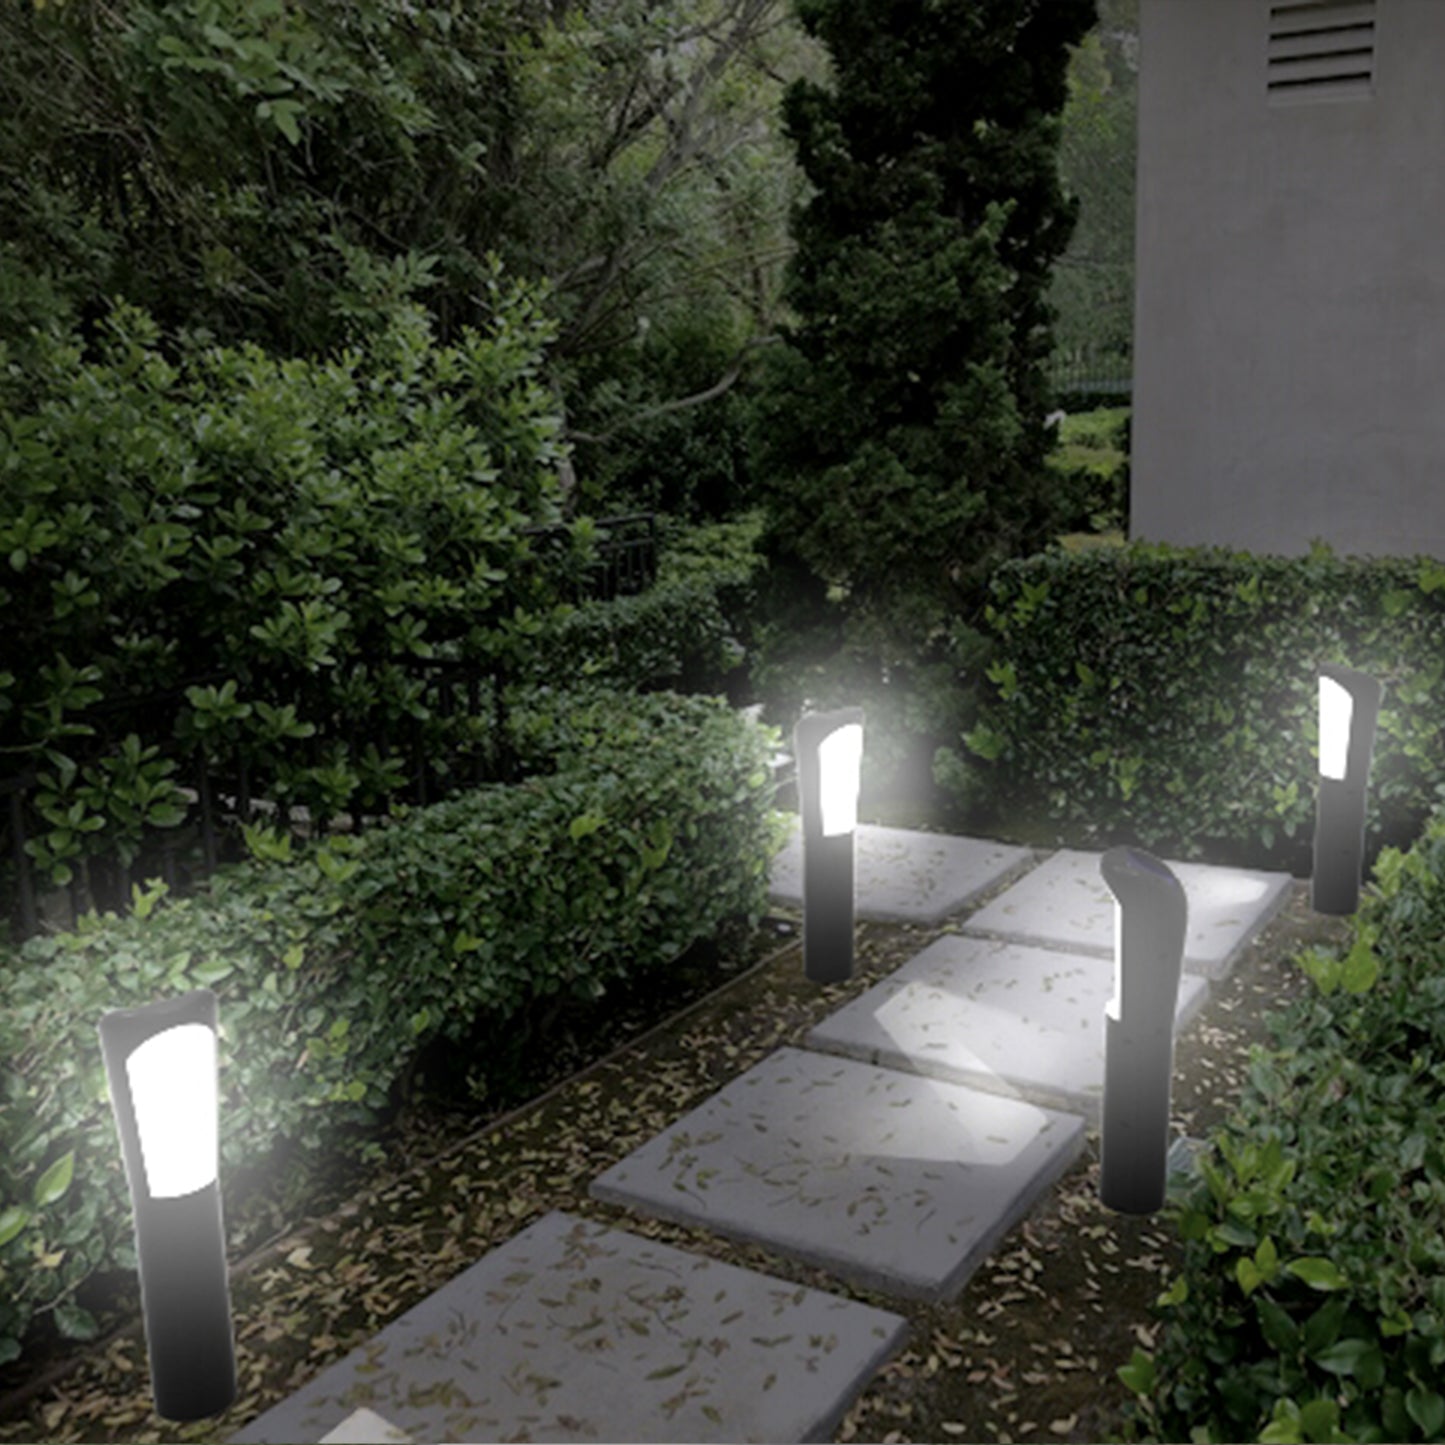 Solar Reflective Pathway Light (Dual Lighting Modes)